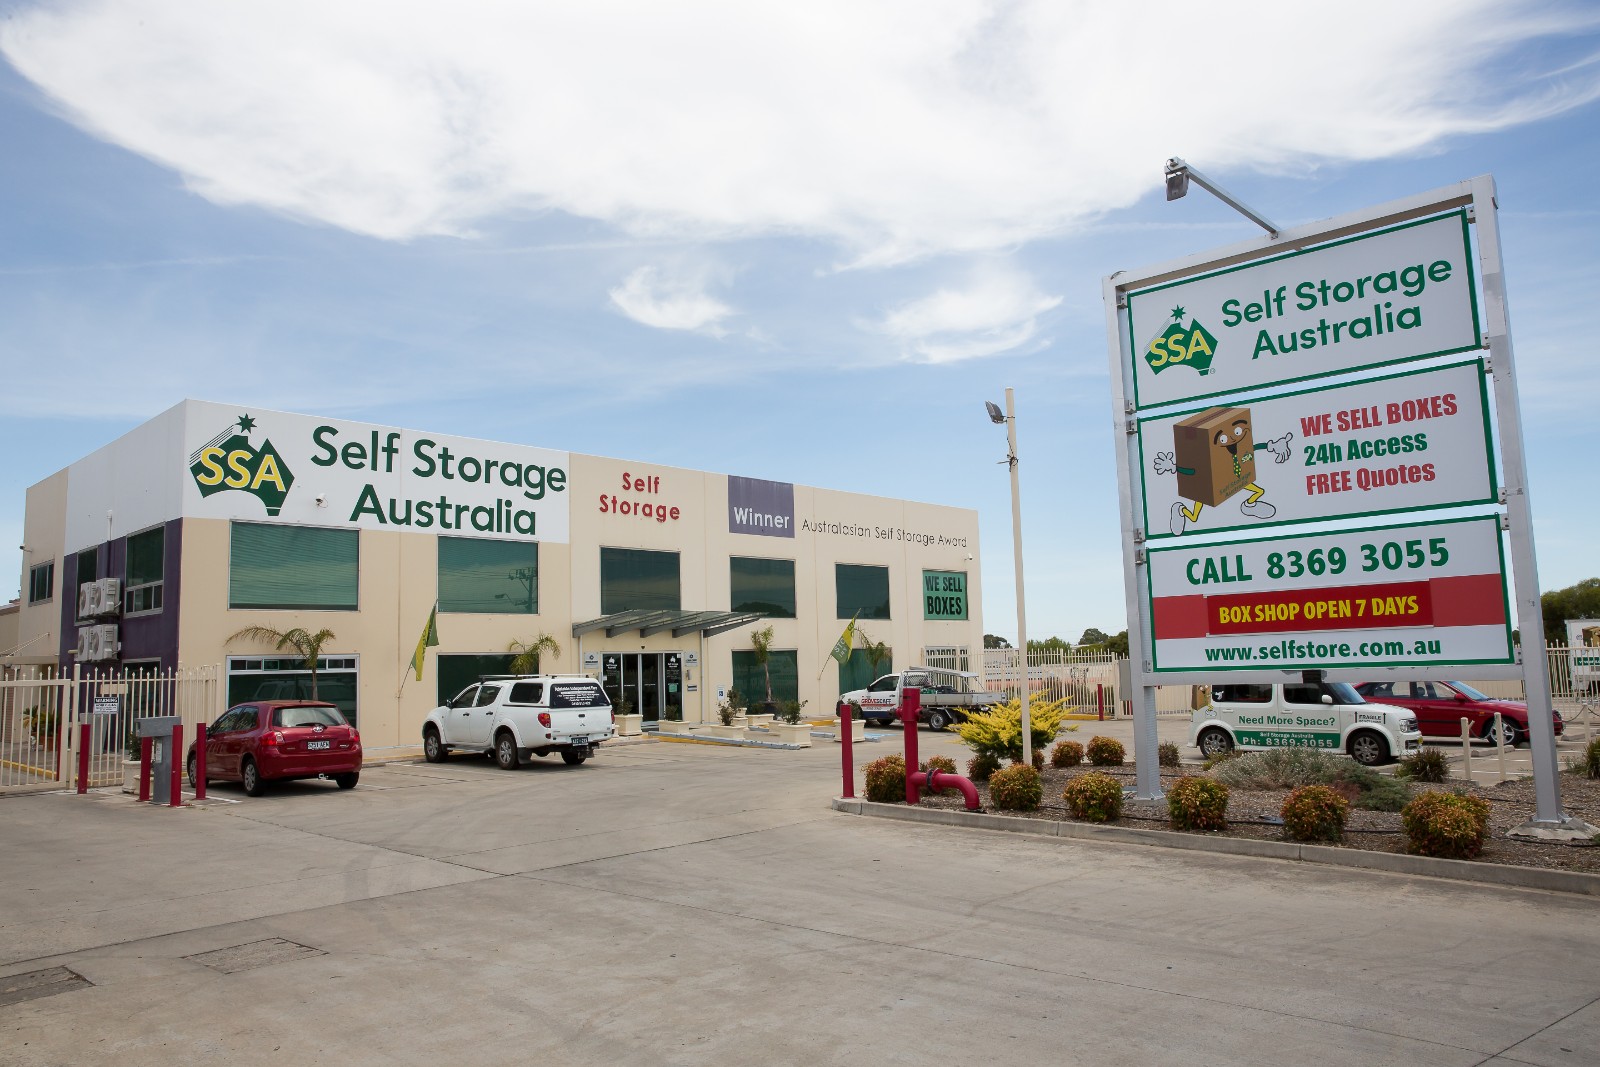 Self Storage Australia Adelaide Facility